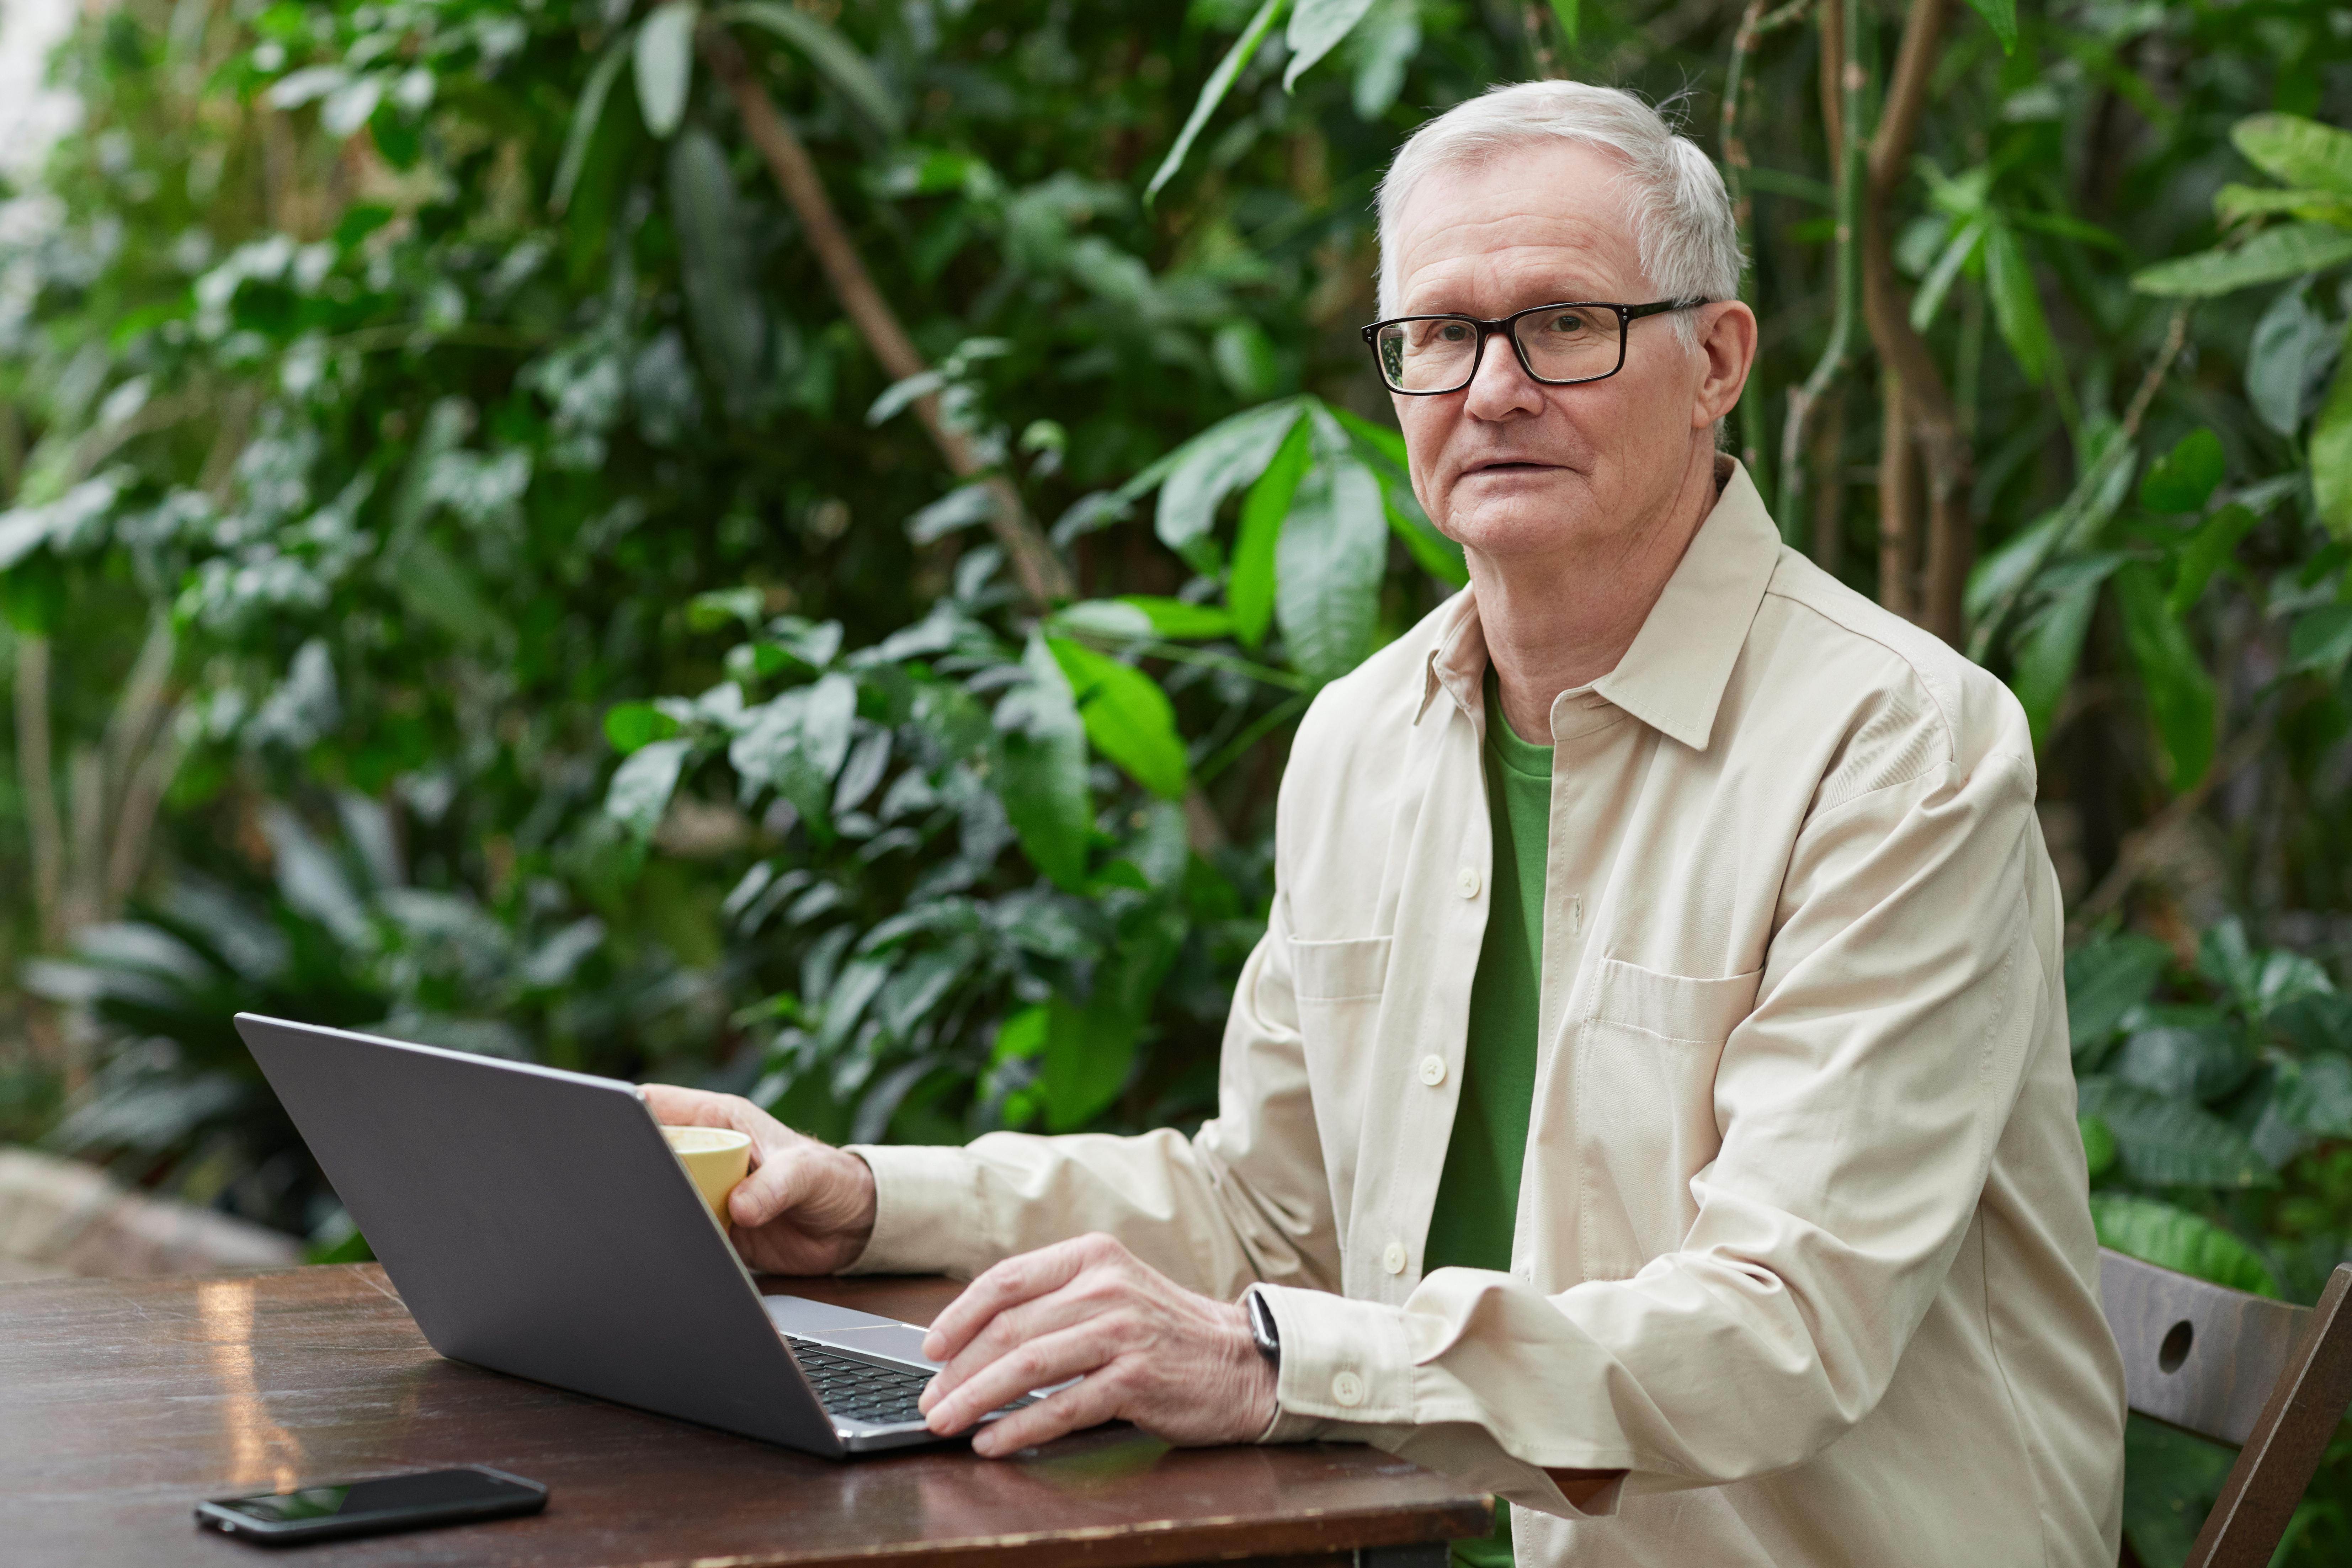 An older man on his laptop | Source: Pexels